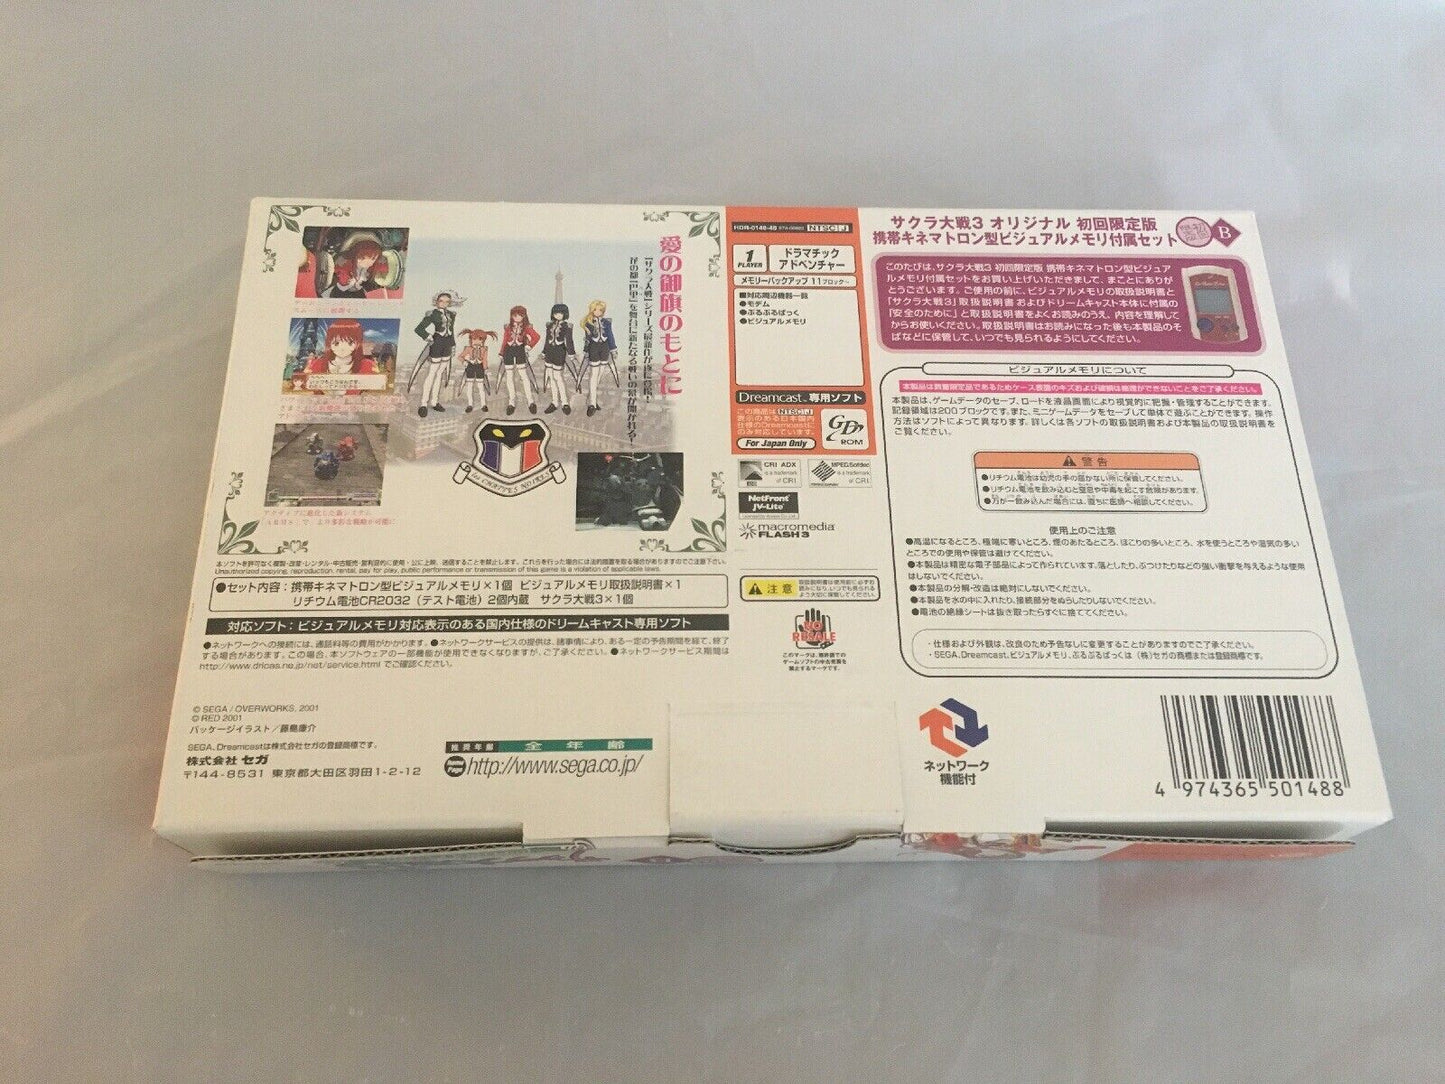 Sega Dreamcast Sakura Wars 3 Limited Edition (Sakura Taisen) Asian Edition